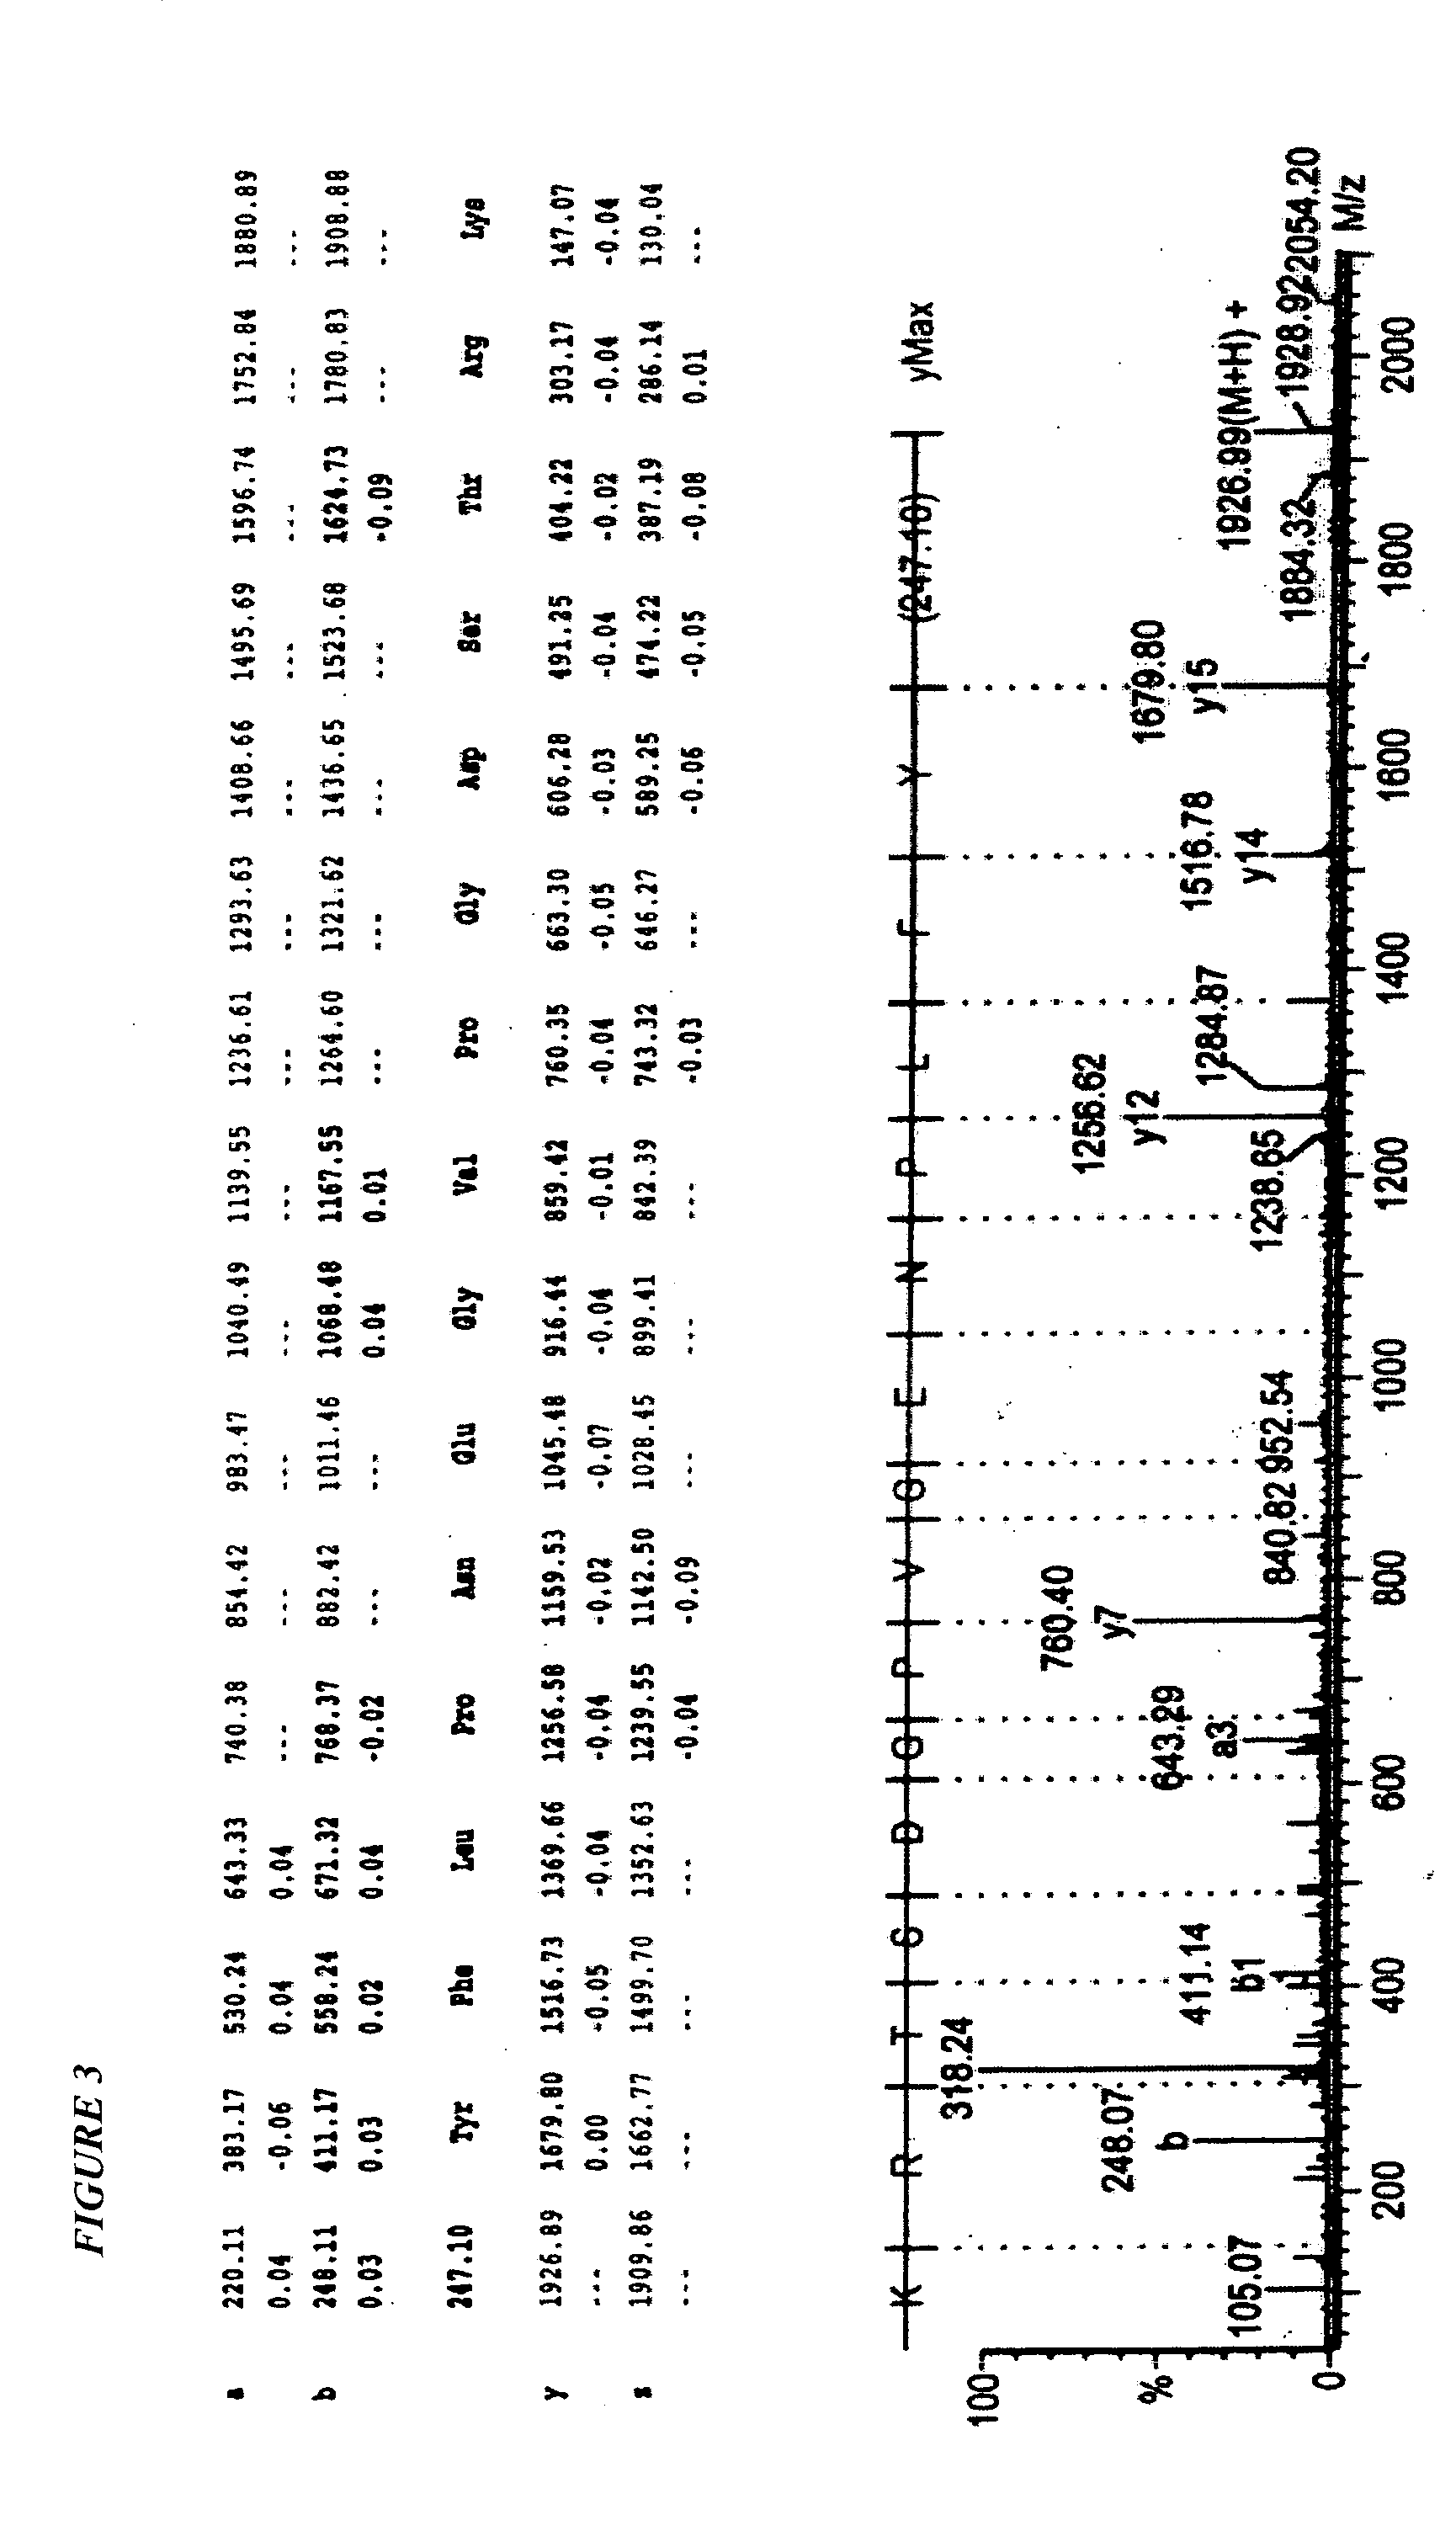 Protein markers for human benign prostatic hyperplasia (BPH)